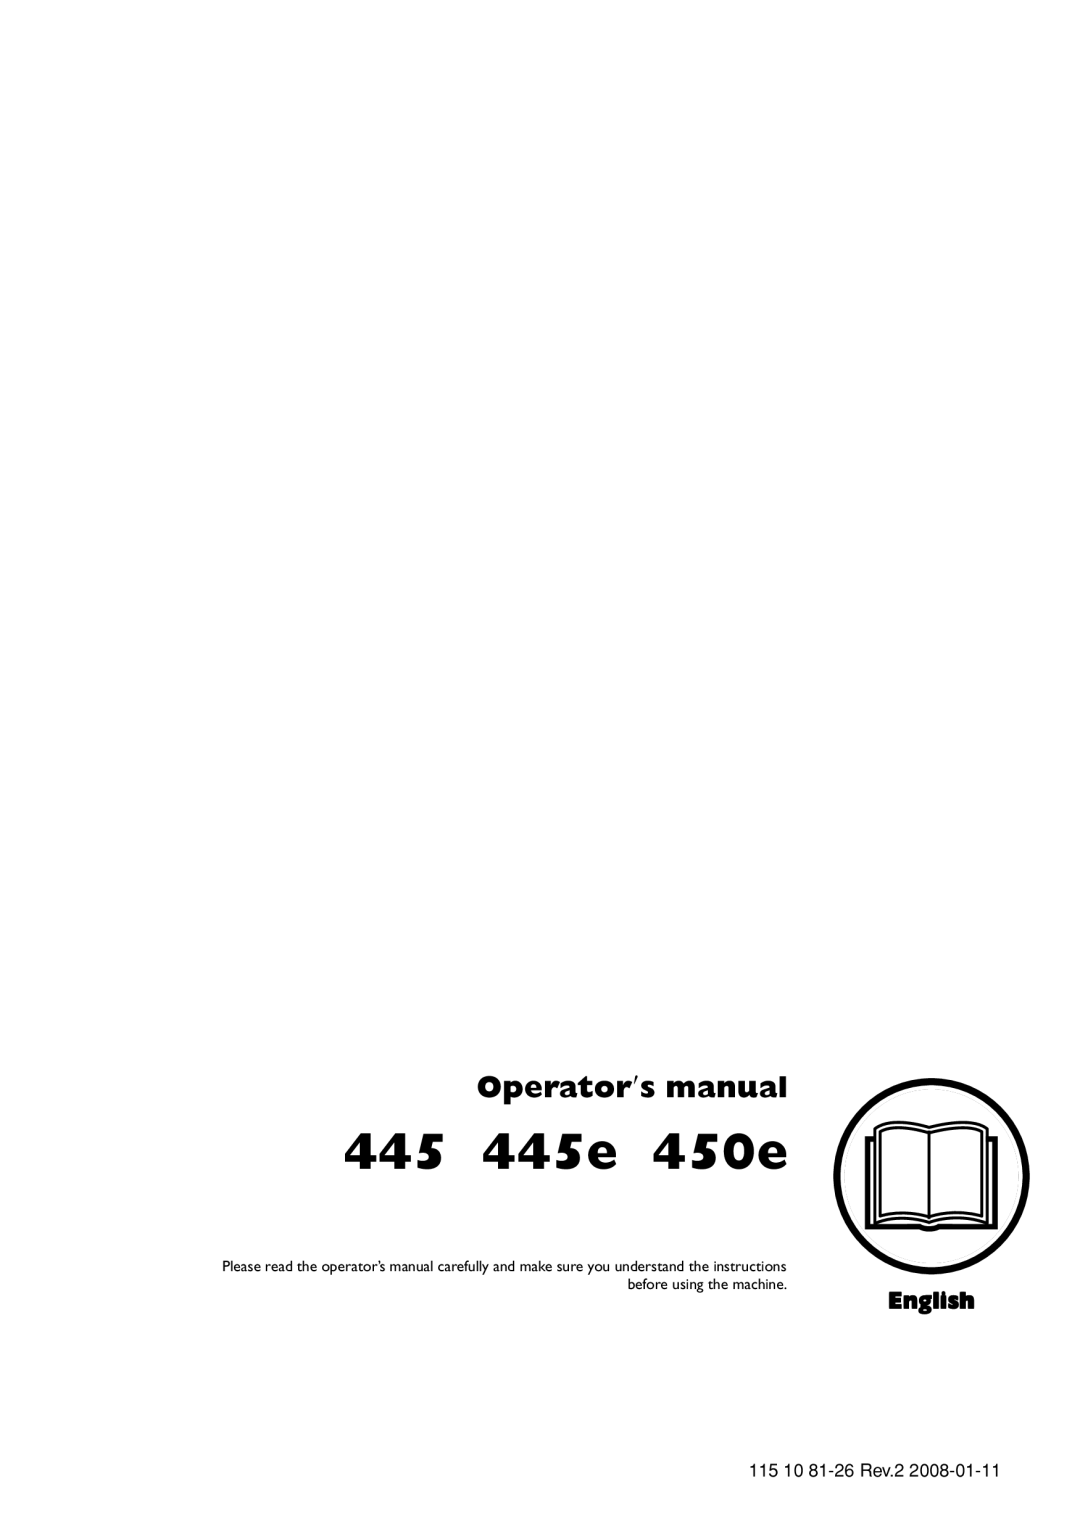 Husqvarna 445, 445e, 450e manual Operator′s manual, 445 445e 450e 